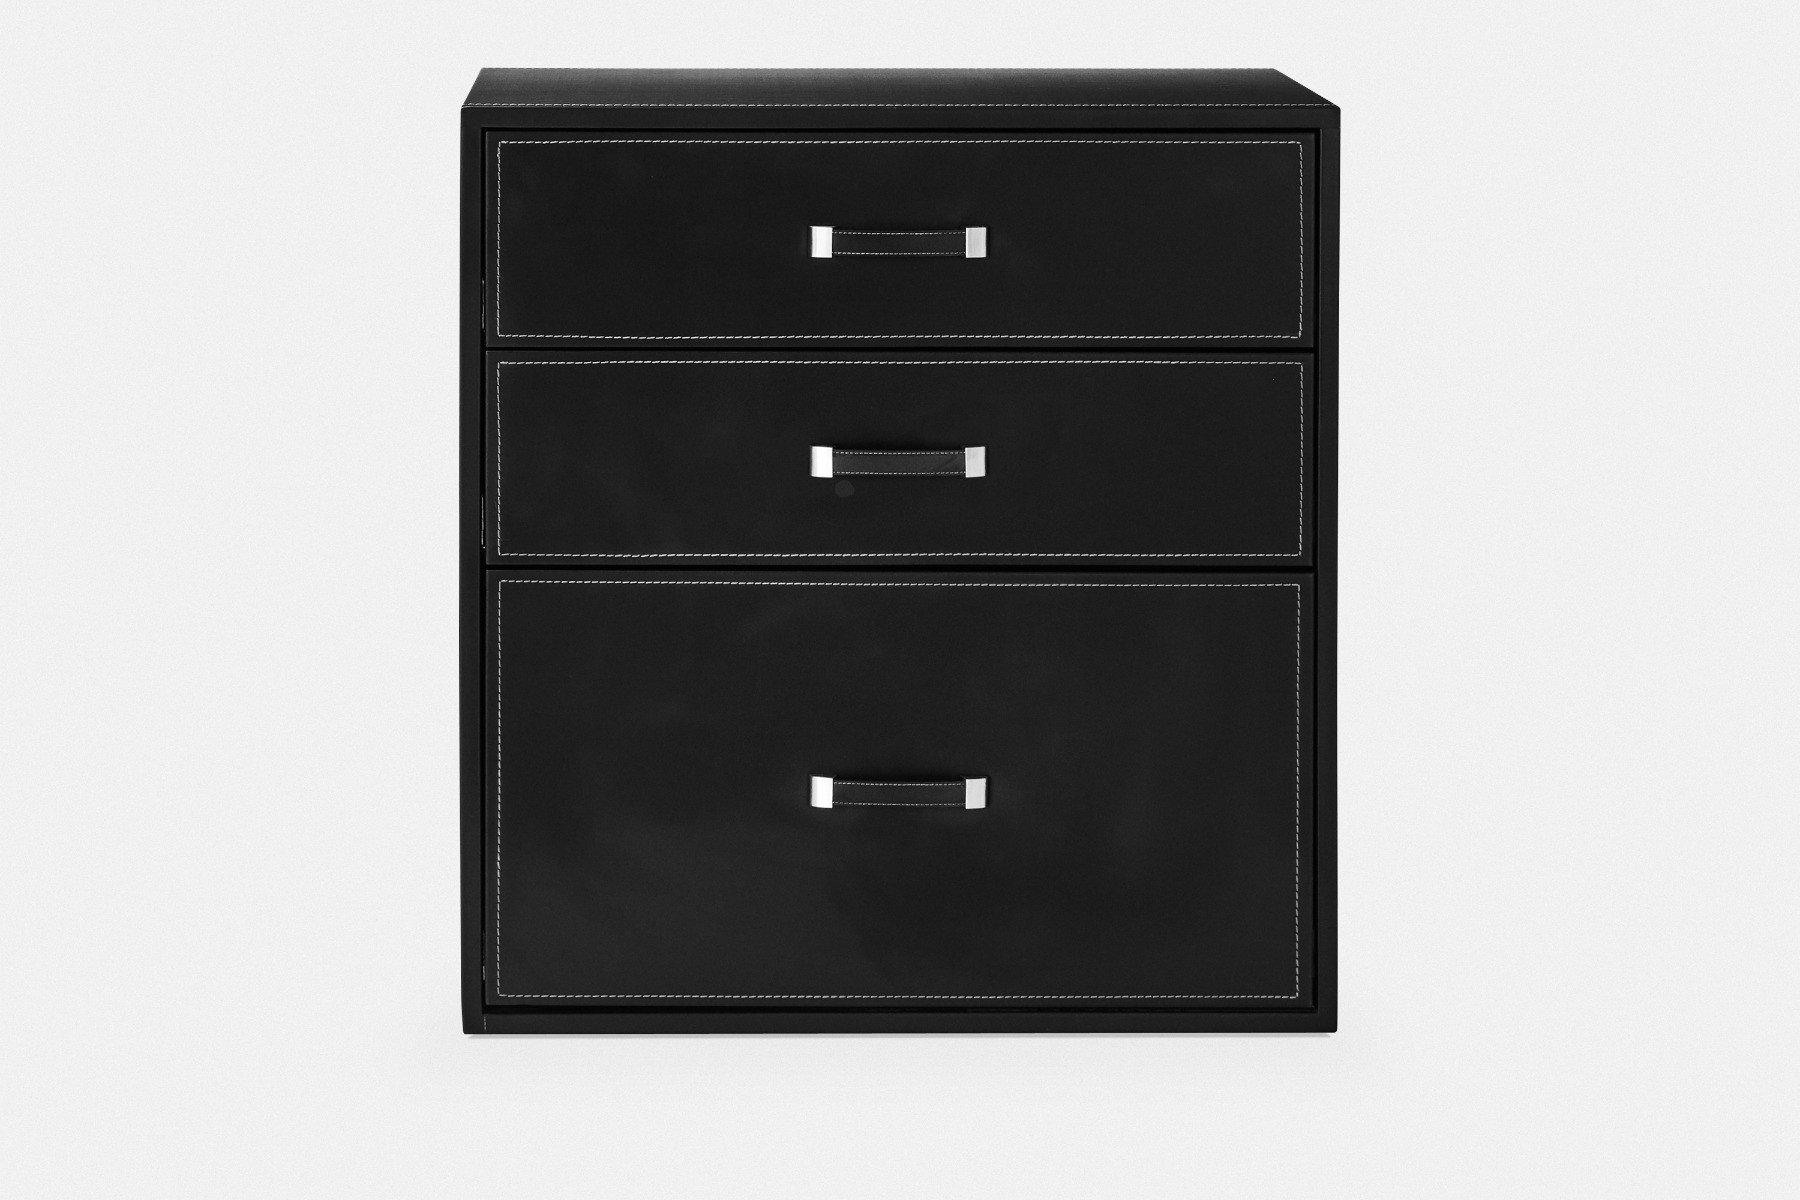 Camus Black Leather Filing Cabinet Maison Corbeil regarding size 1800 X 1200